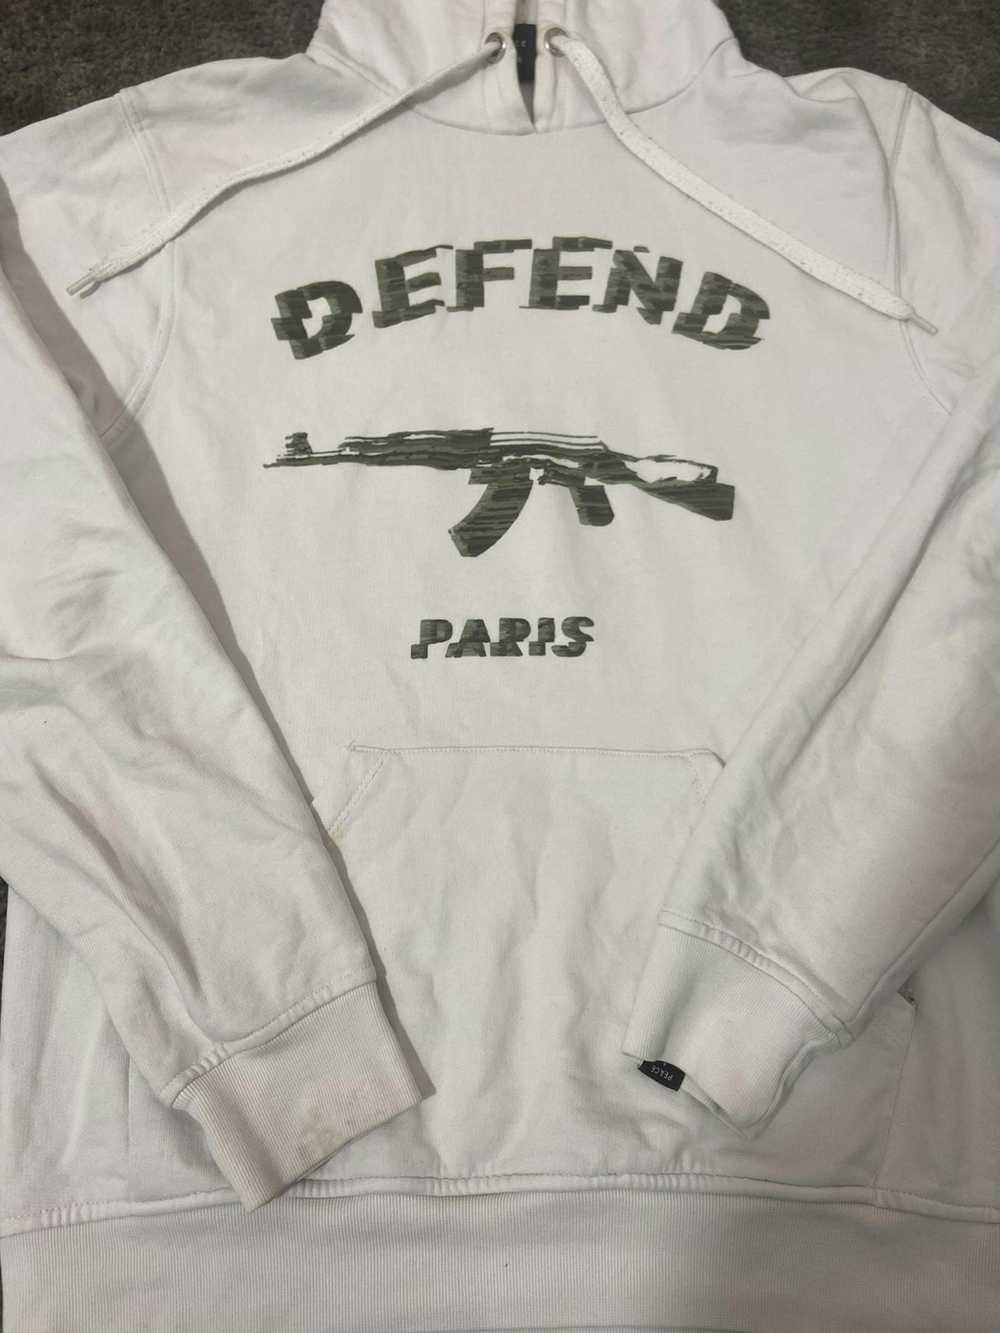 Defend Paris Defend Paris hoodie - image 2